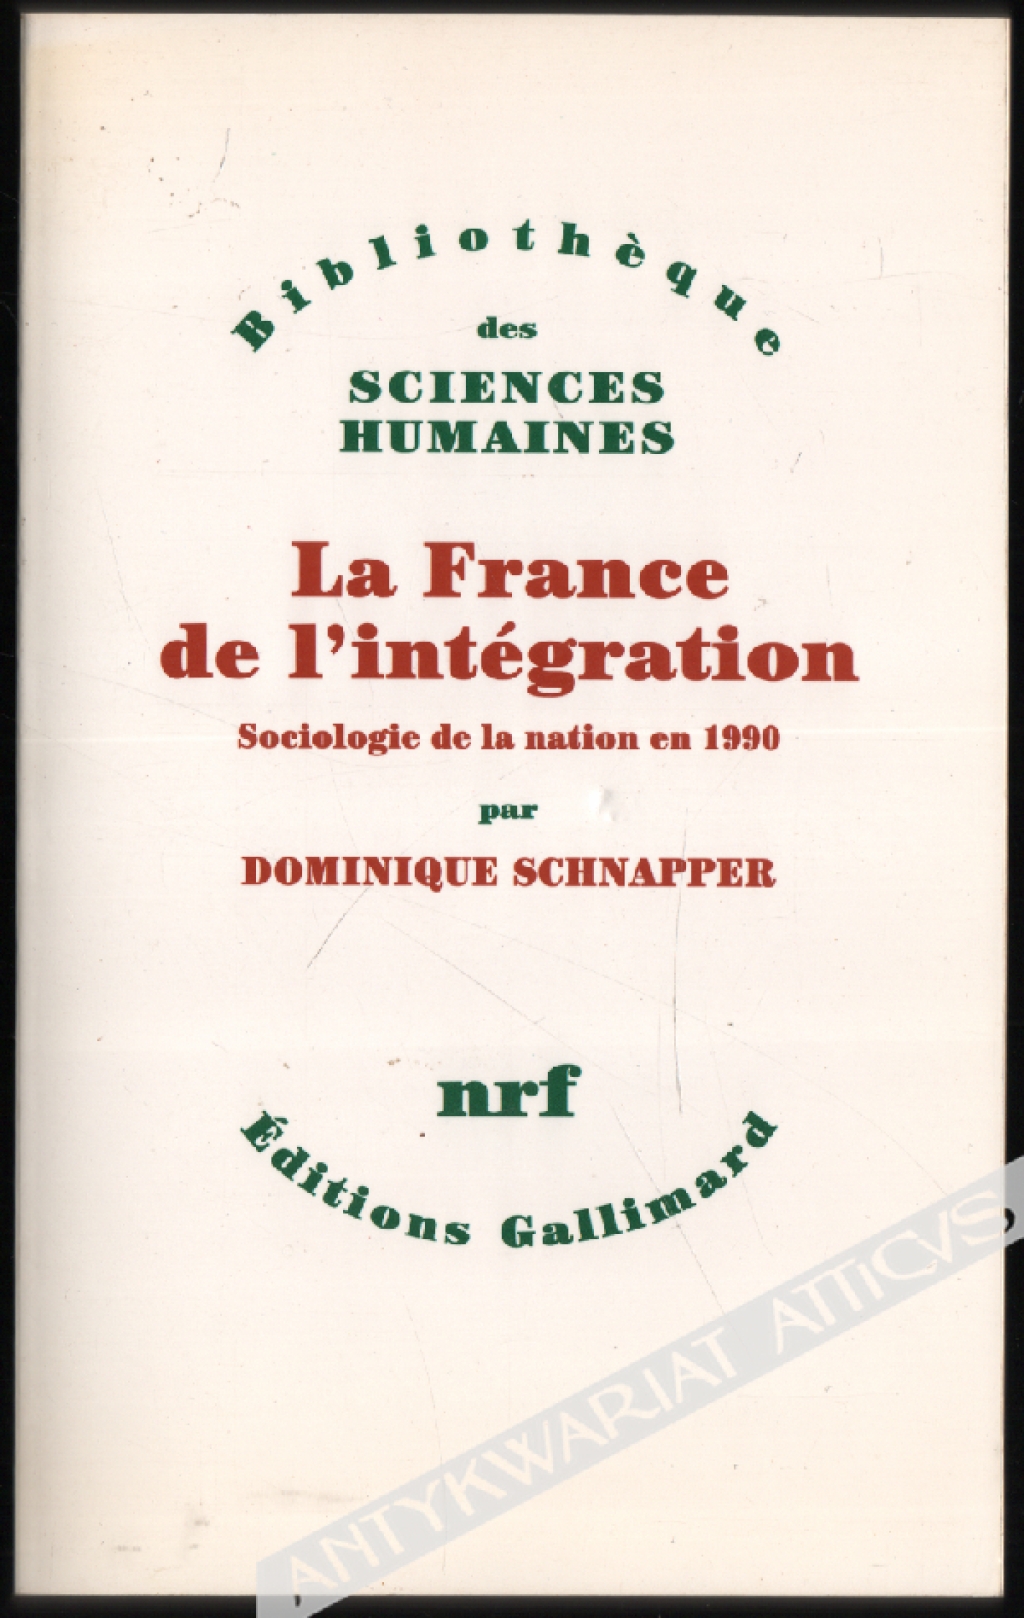 La France de l'integration. Sociologie de la nation en 1990